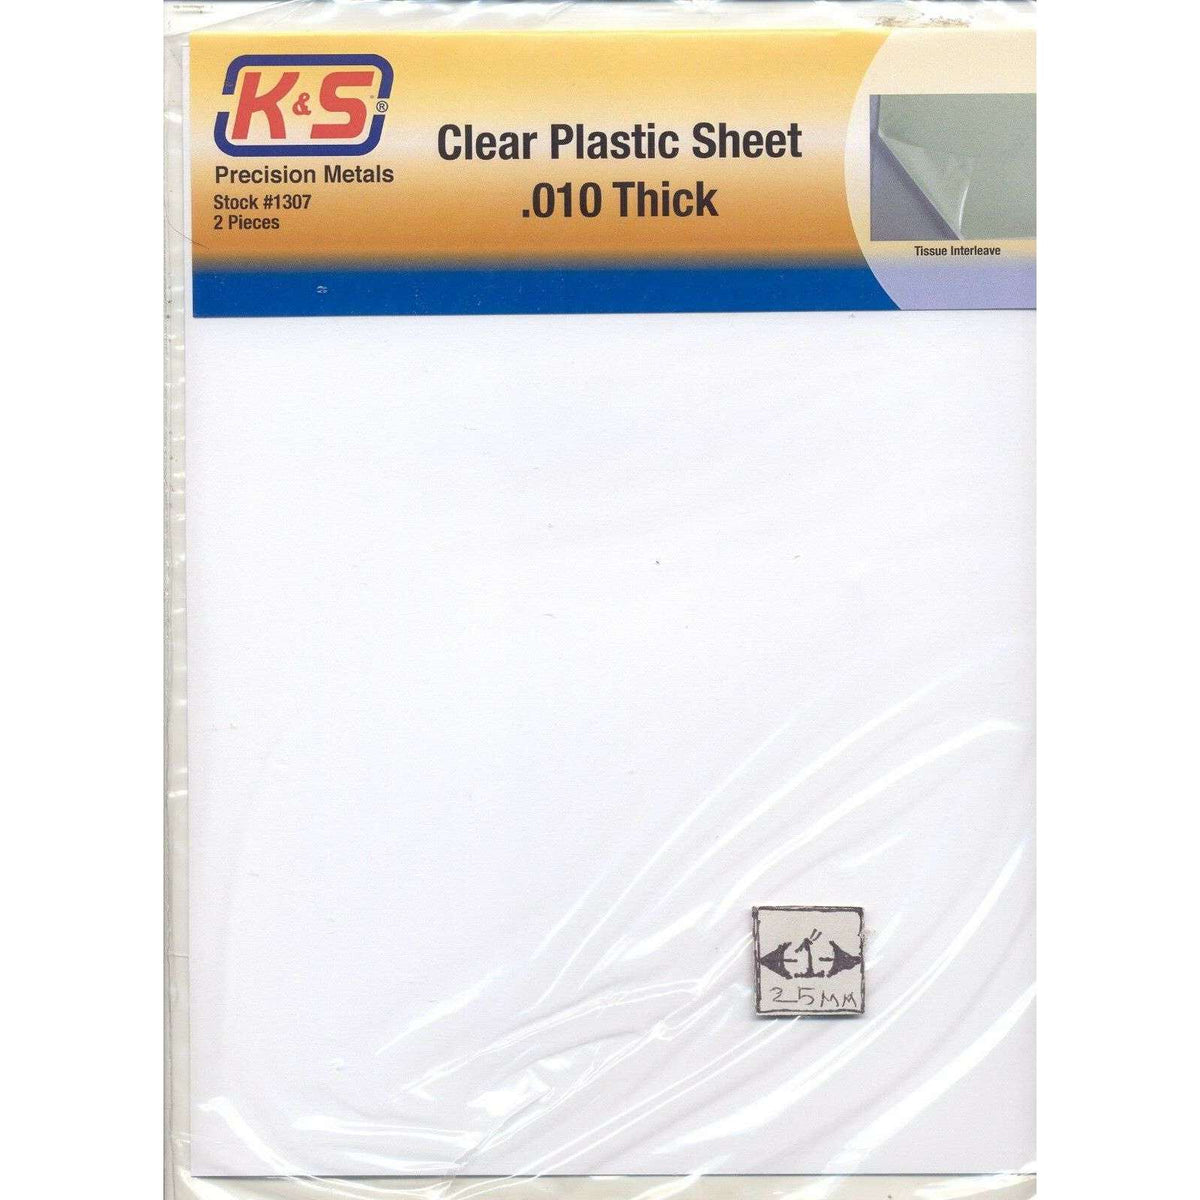 Shop Plastic Sheets, Clear & Color Options